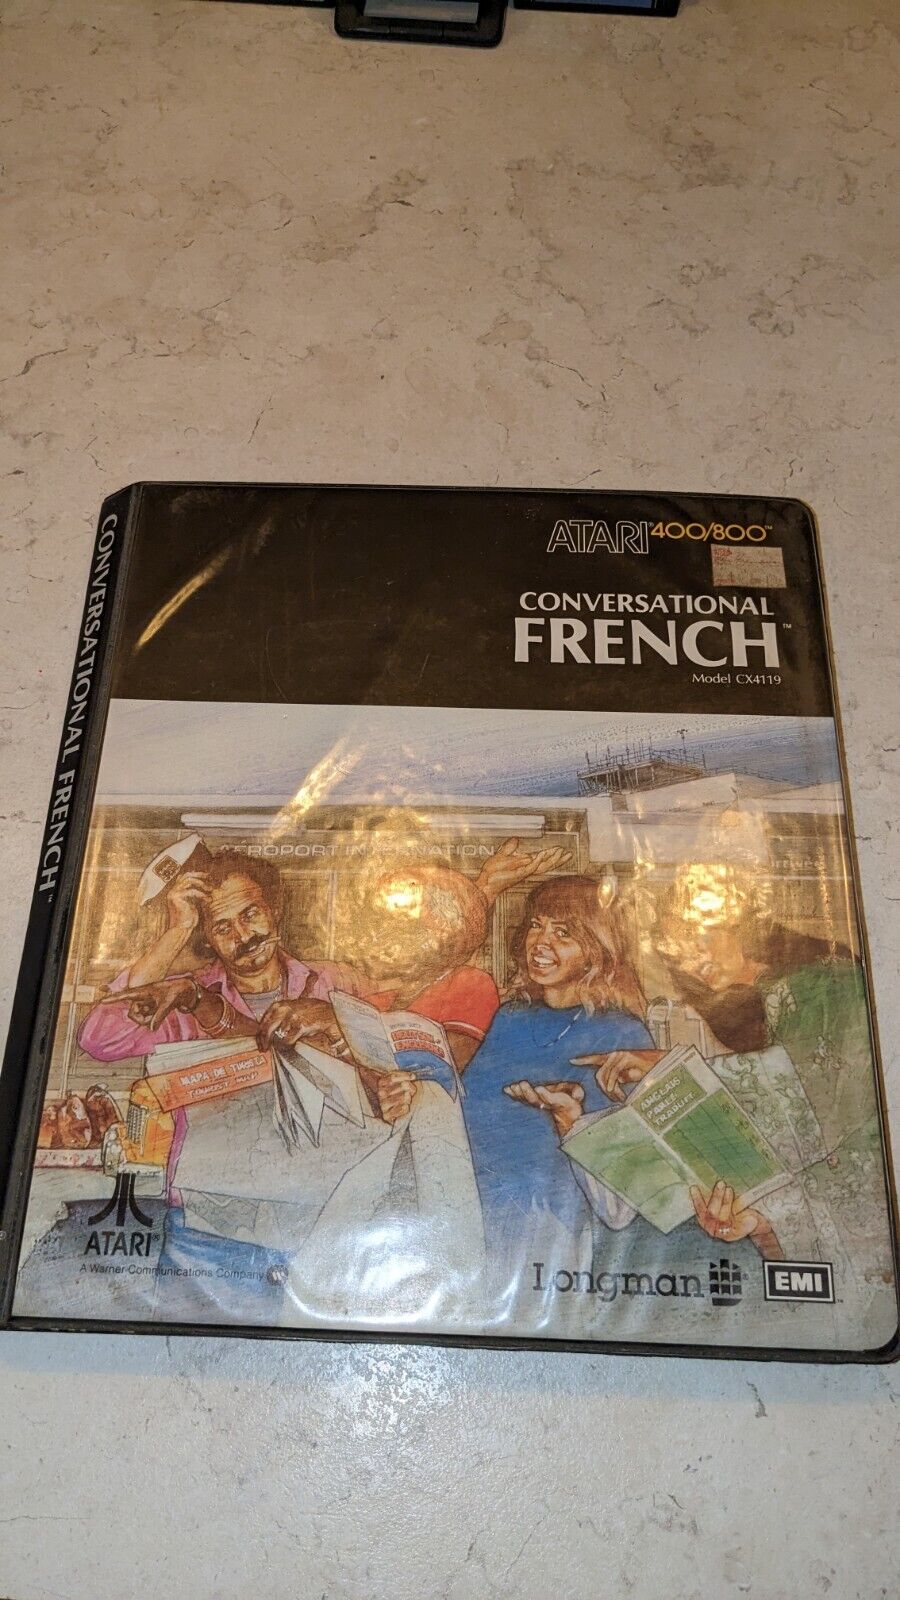 Atari 8-Bit 400 800 Conversational French Cassettes 1980 CX4119 No Book 